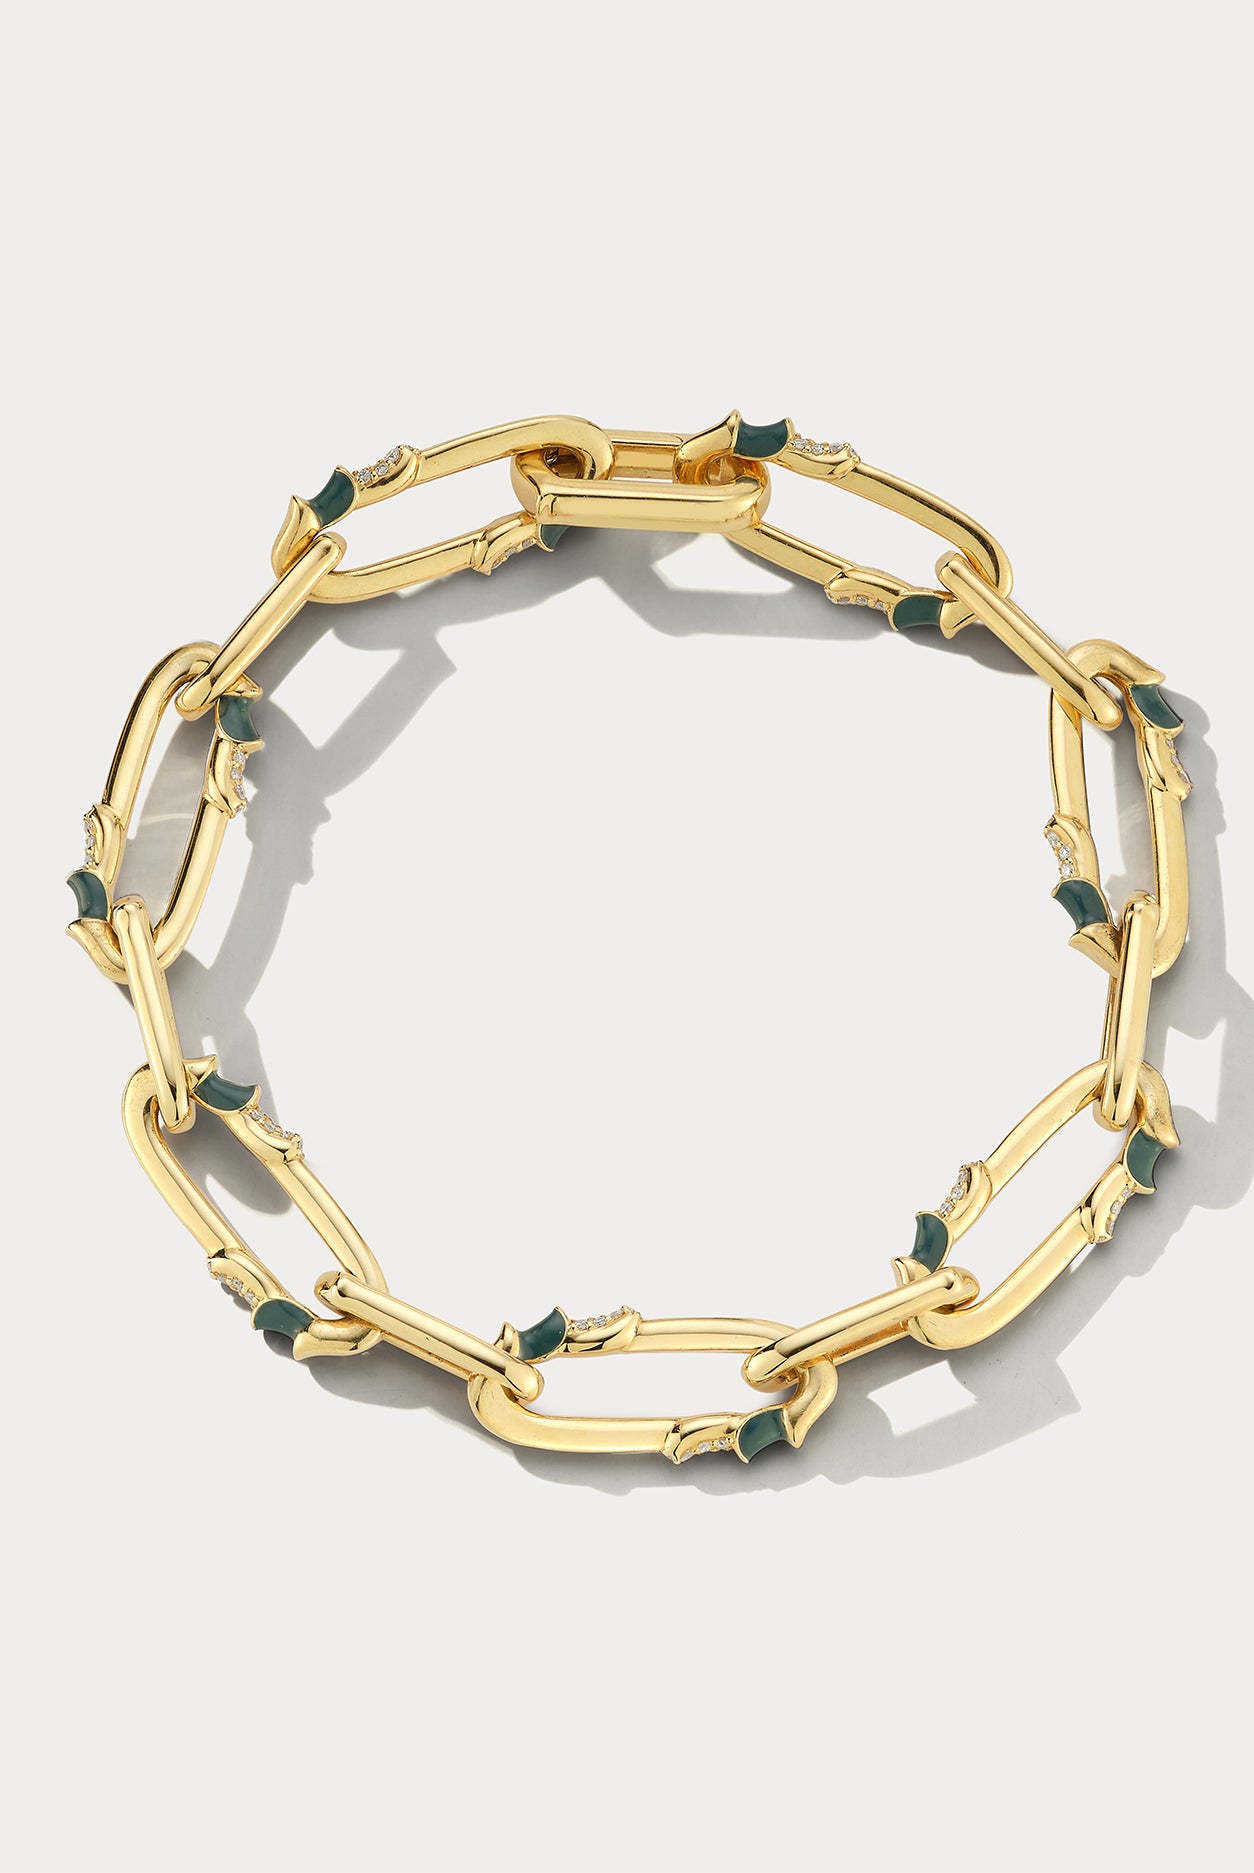 Yellow Gold, Teal Enamel, and Diamond Chain Bracelet - Ammrada